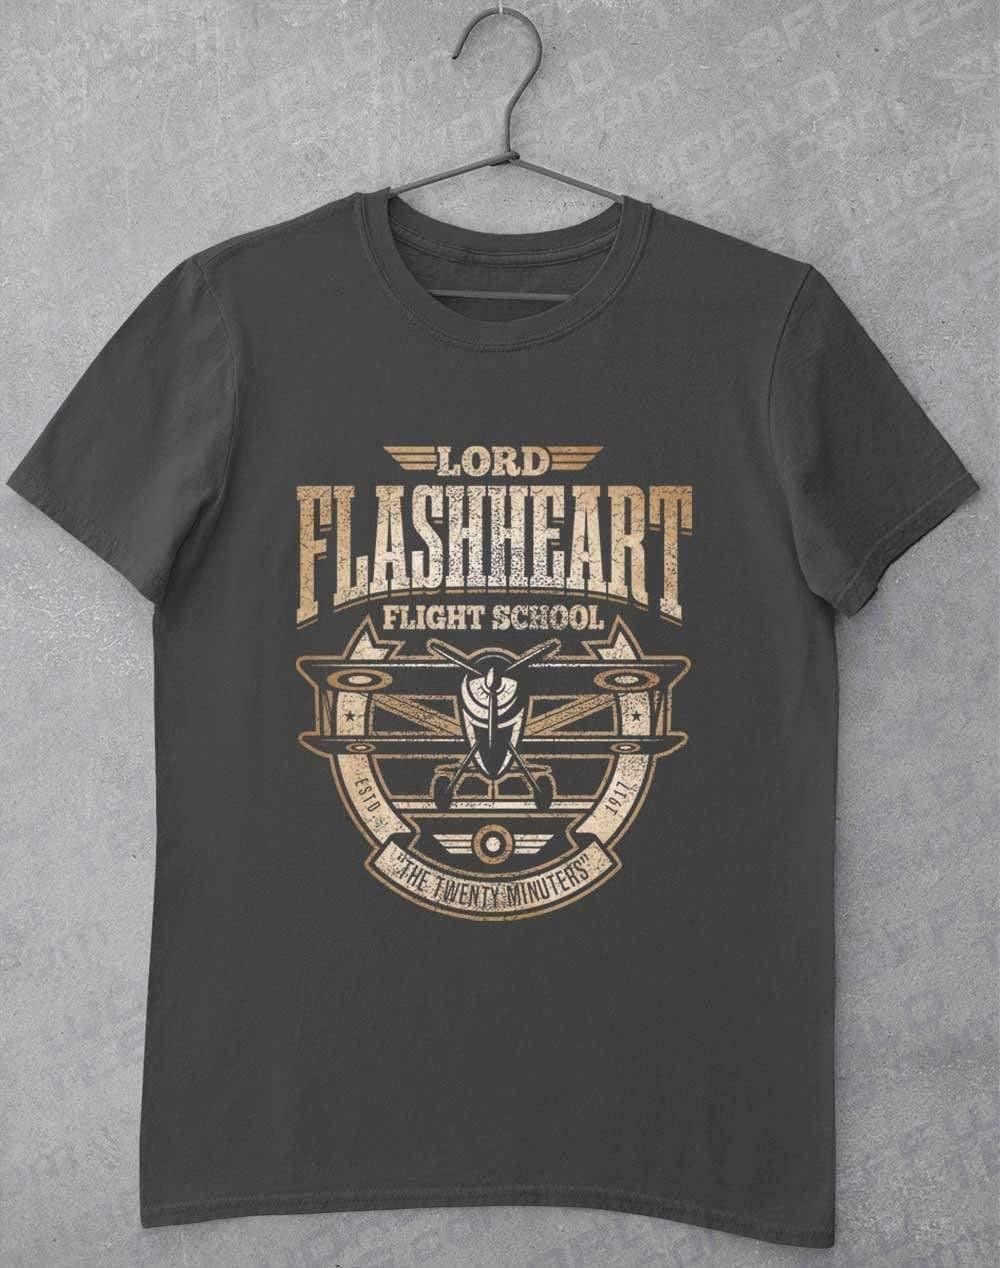 Flashheart's Flight School T-Shirt S / Charcoal  - Off World Tees